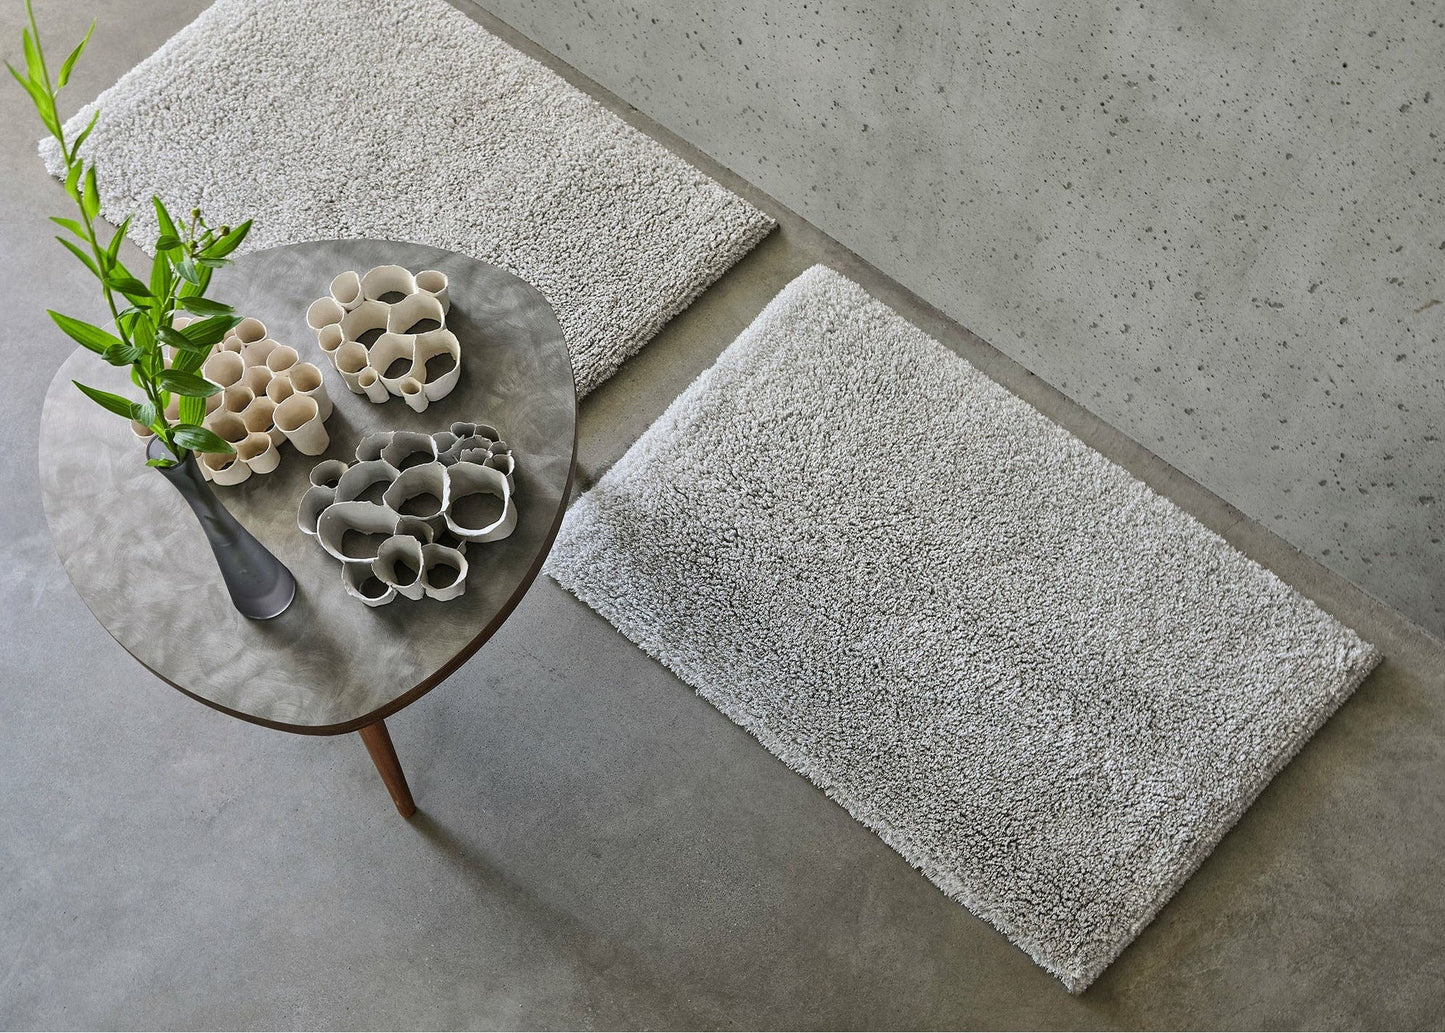 Abyss & Habidecor ELYSEE bath rug - |VESIMI Design| Luxury Bathrooms & Deco